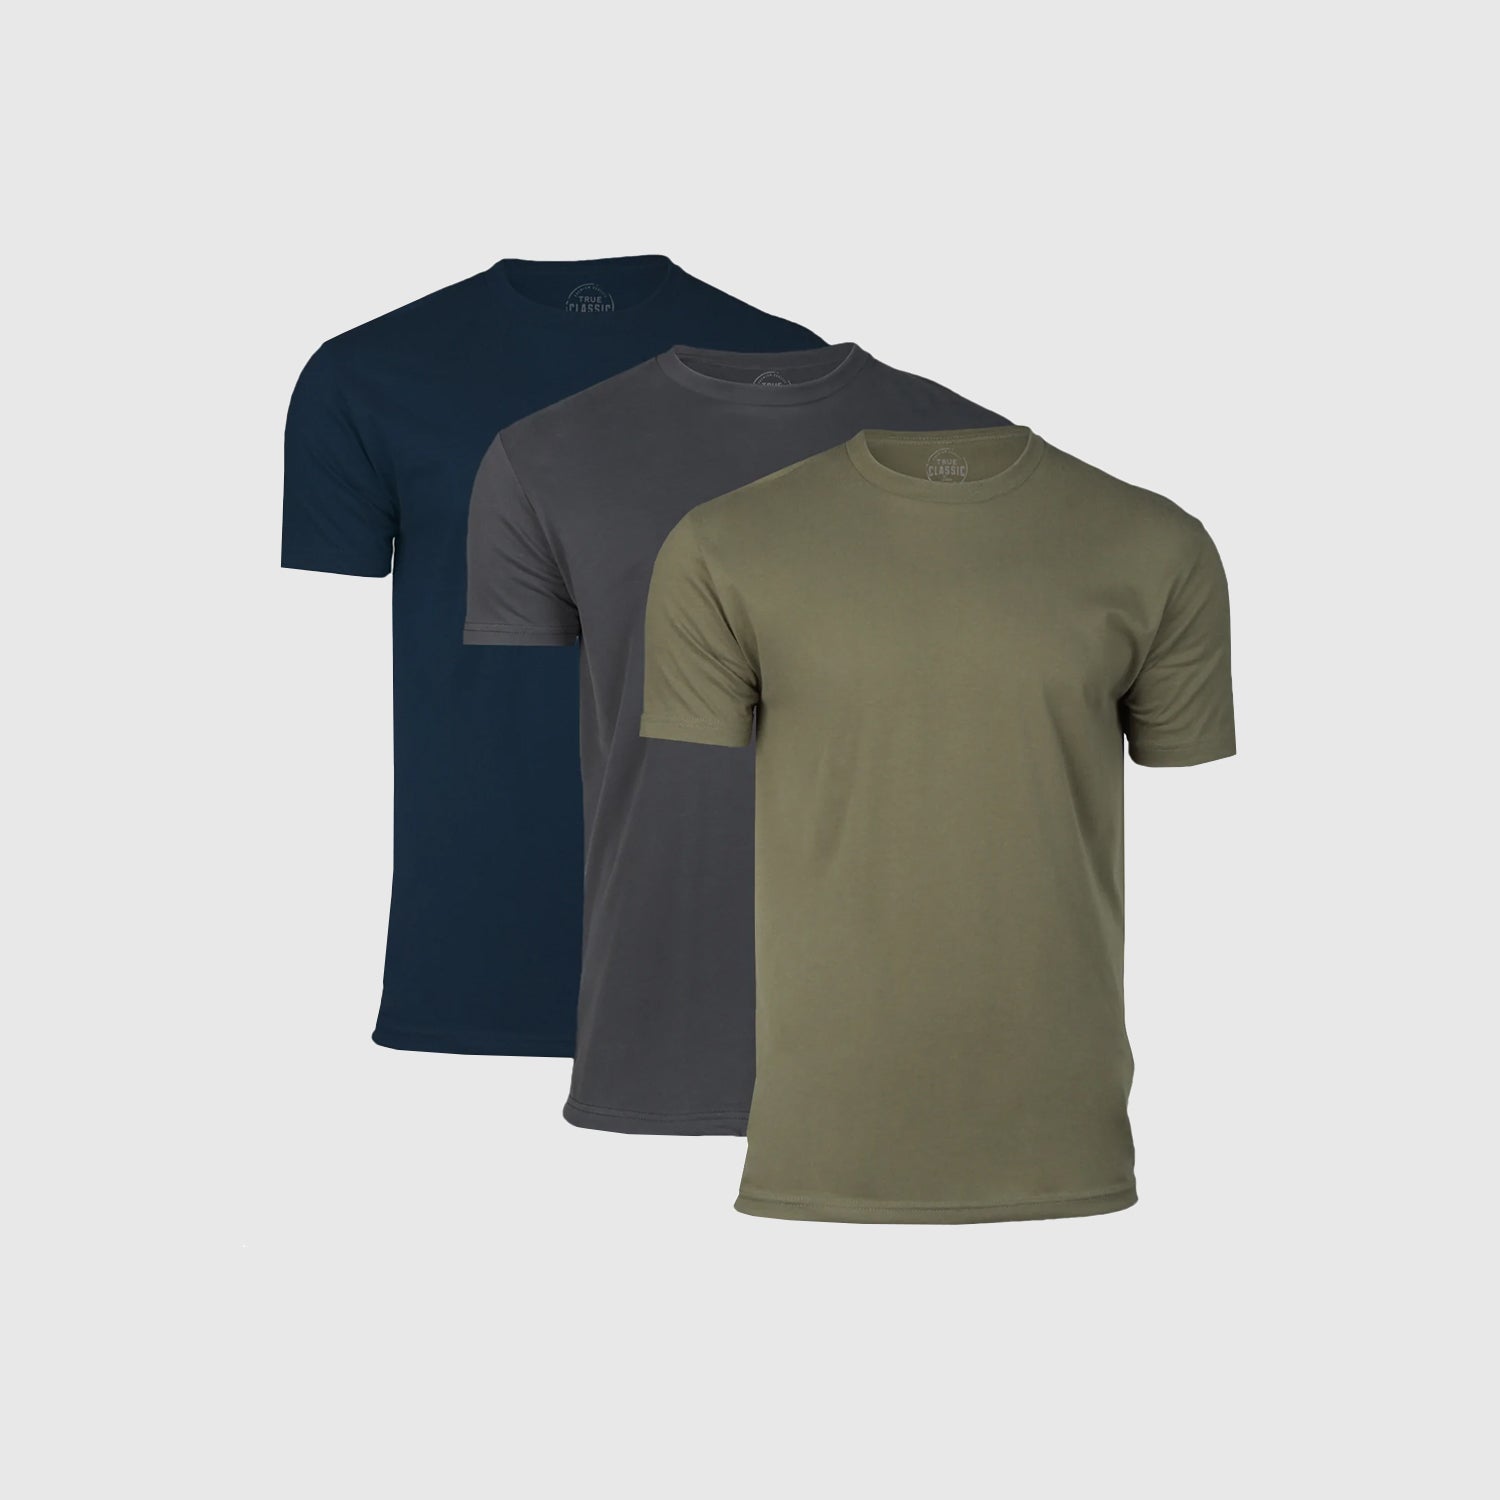 3-Pack | 6 oz. Classic Weight T-shirts Bk/Wt/Off-Wt / L